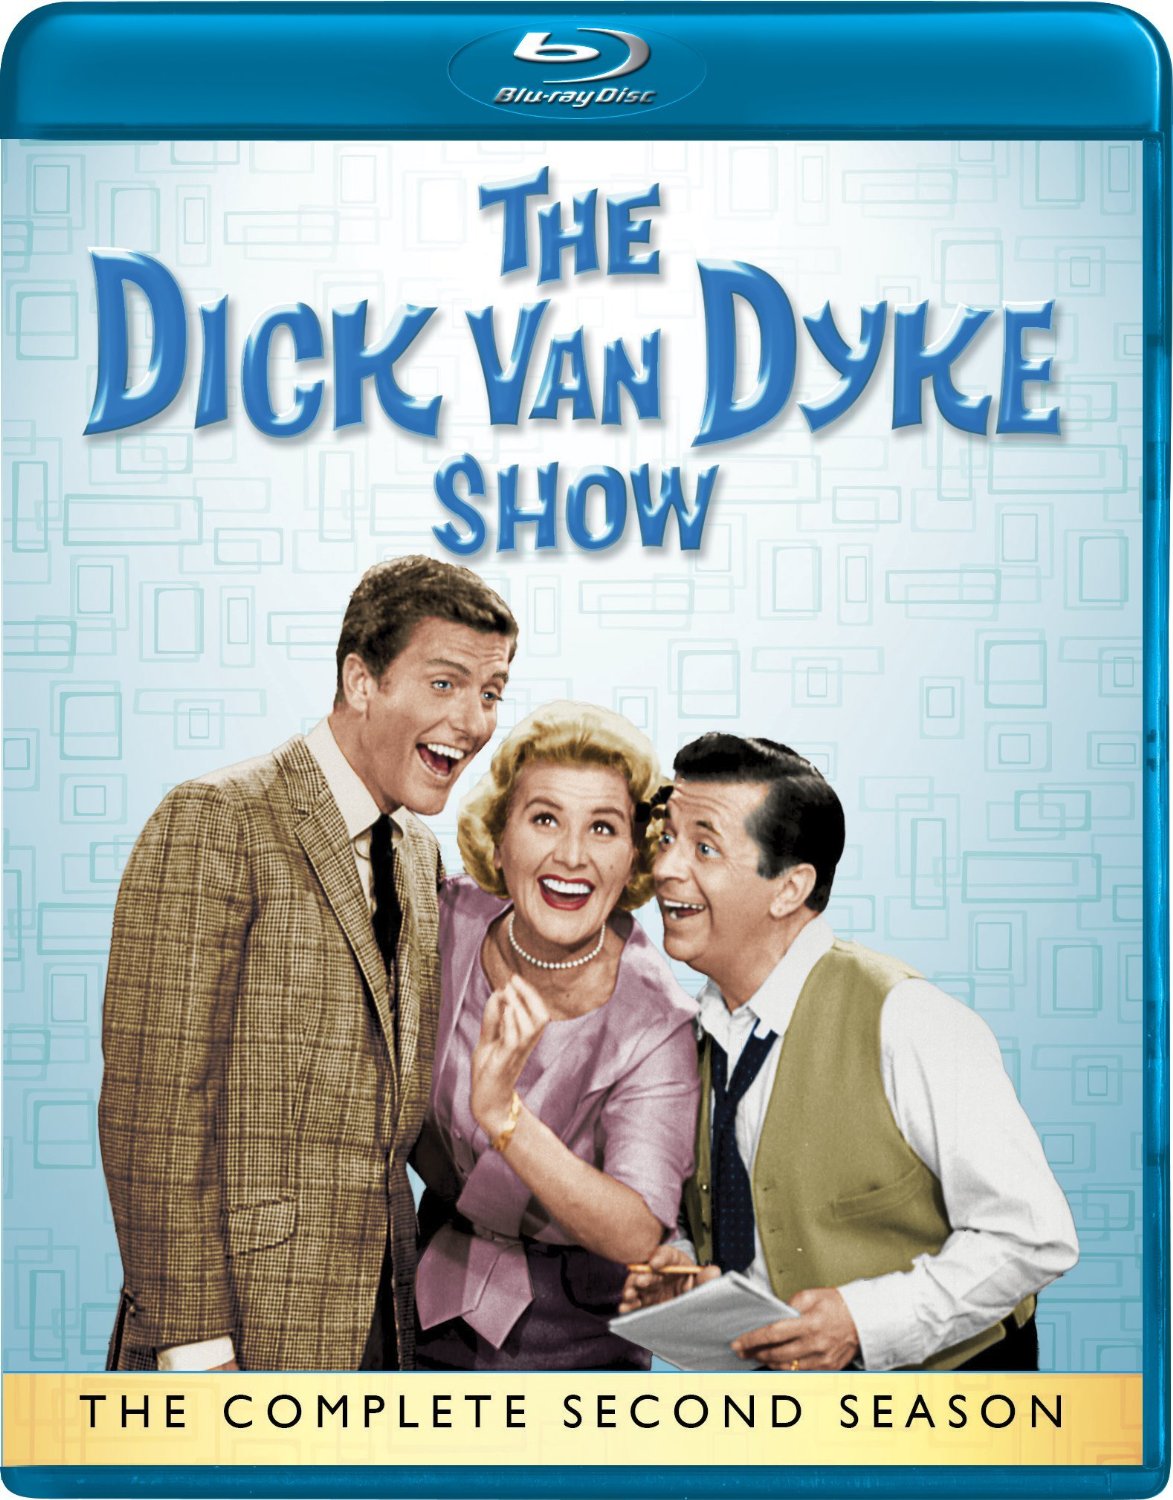 The dick van dyke show season 2